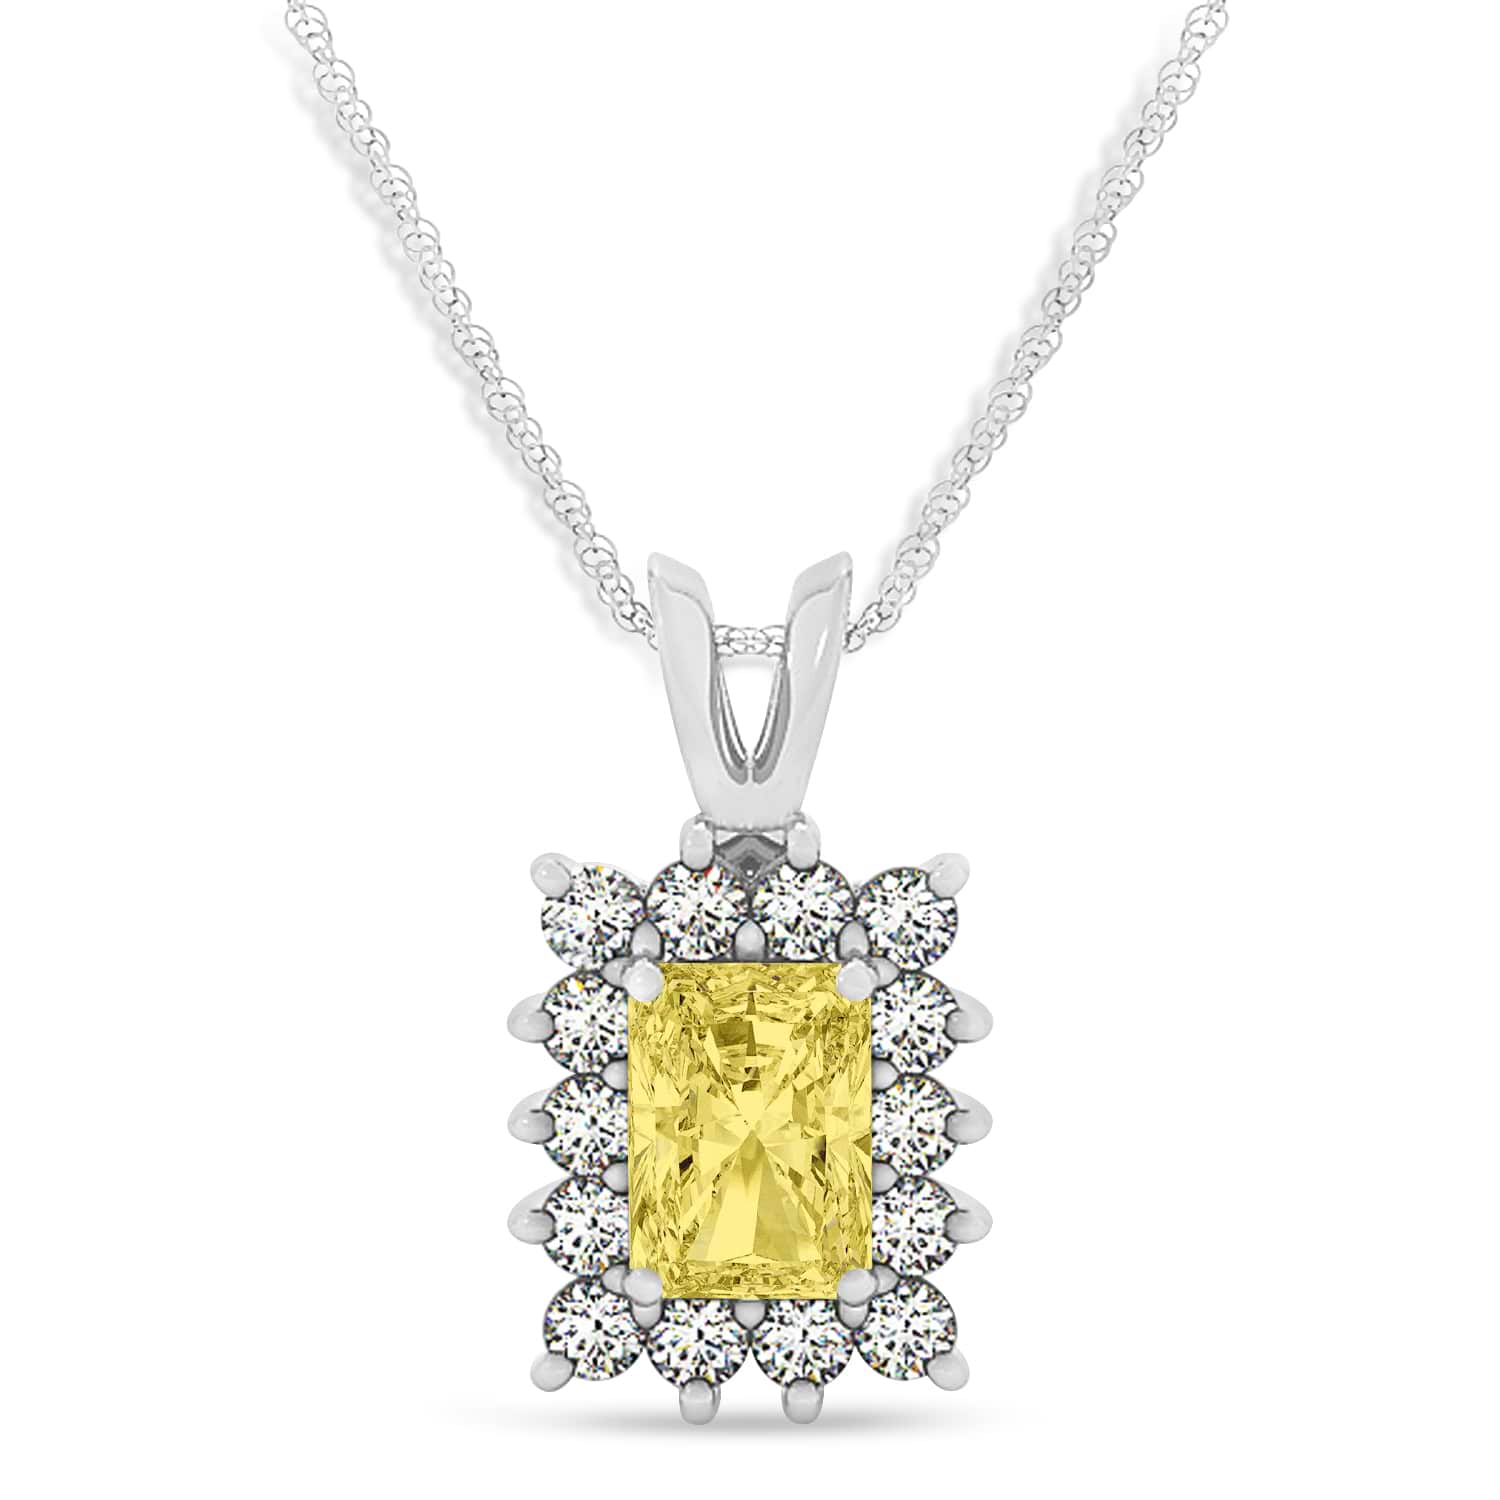 Emerald Shape Yellow Diamond & Diamond Pendant Necklace 14k White Gold (3.00ct)